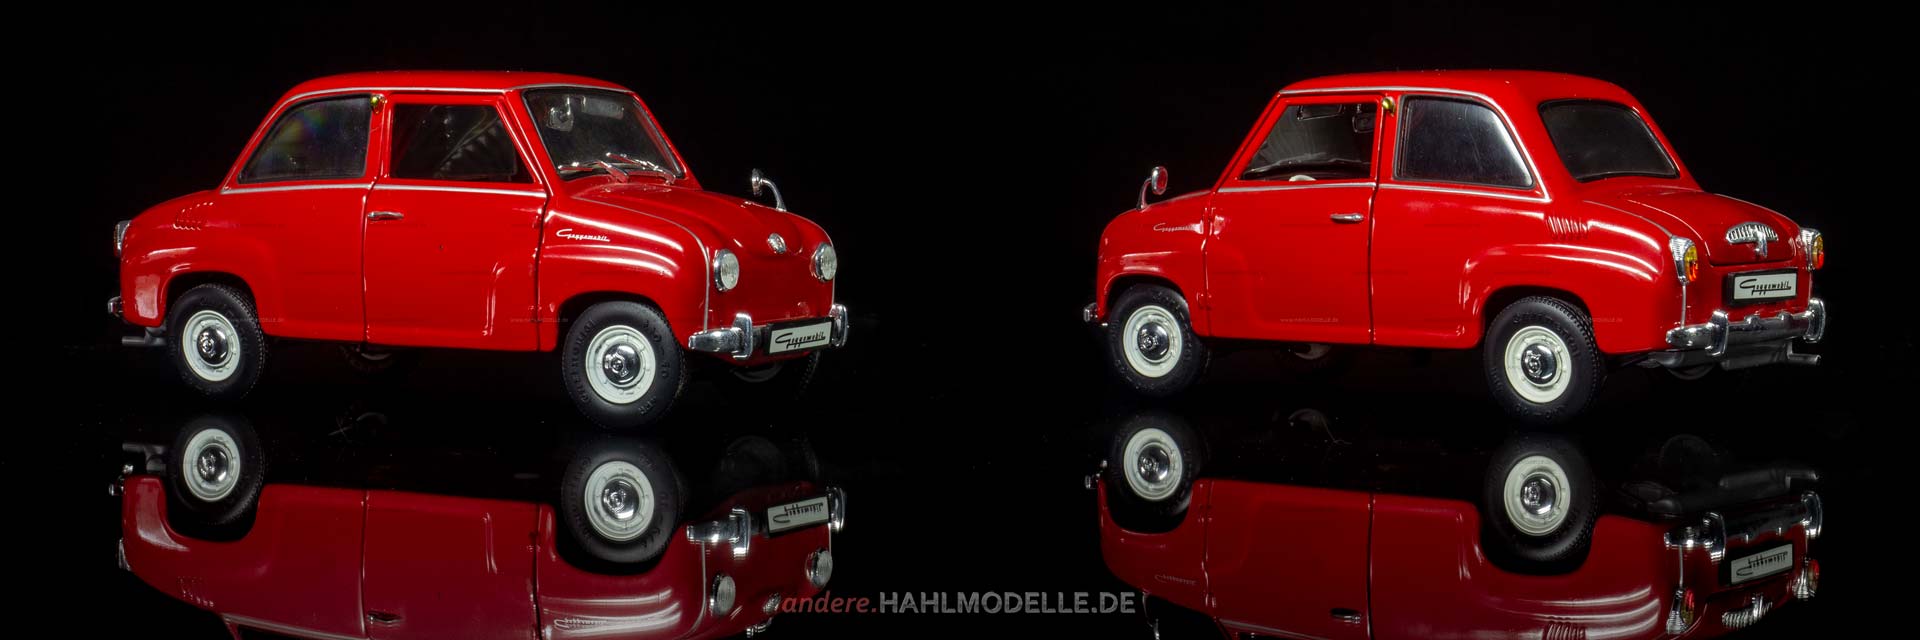 Goggomobil T 250 | Kleinstwagen | Revell | www.andere.hahlmodelle.de